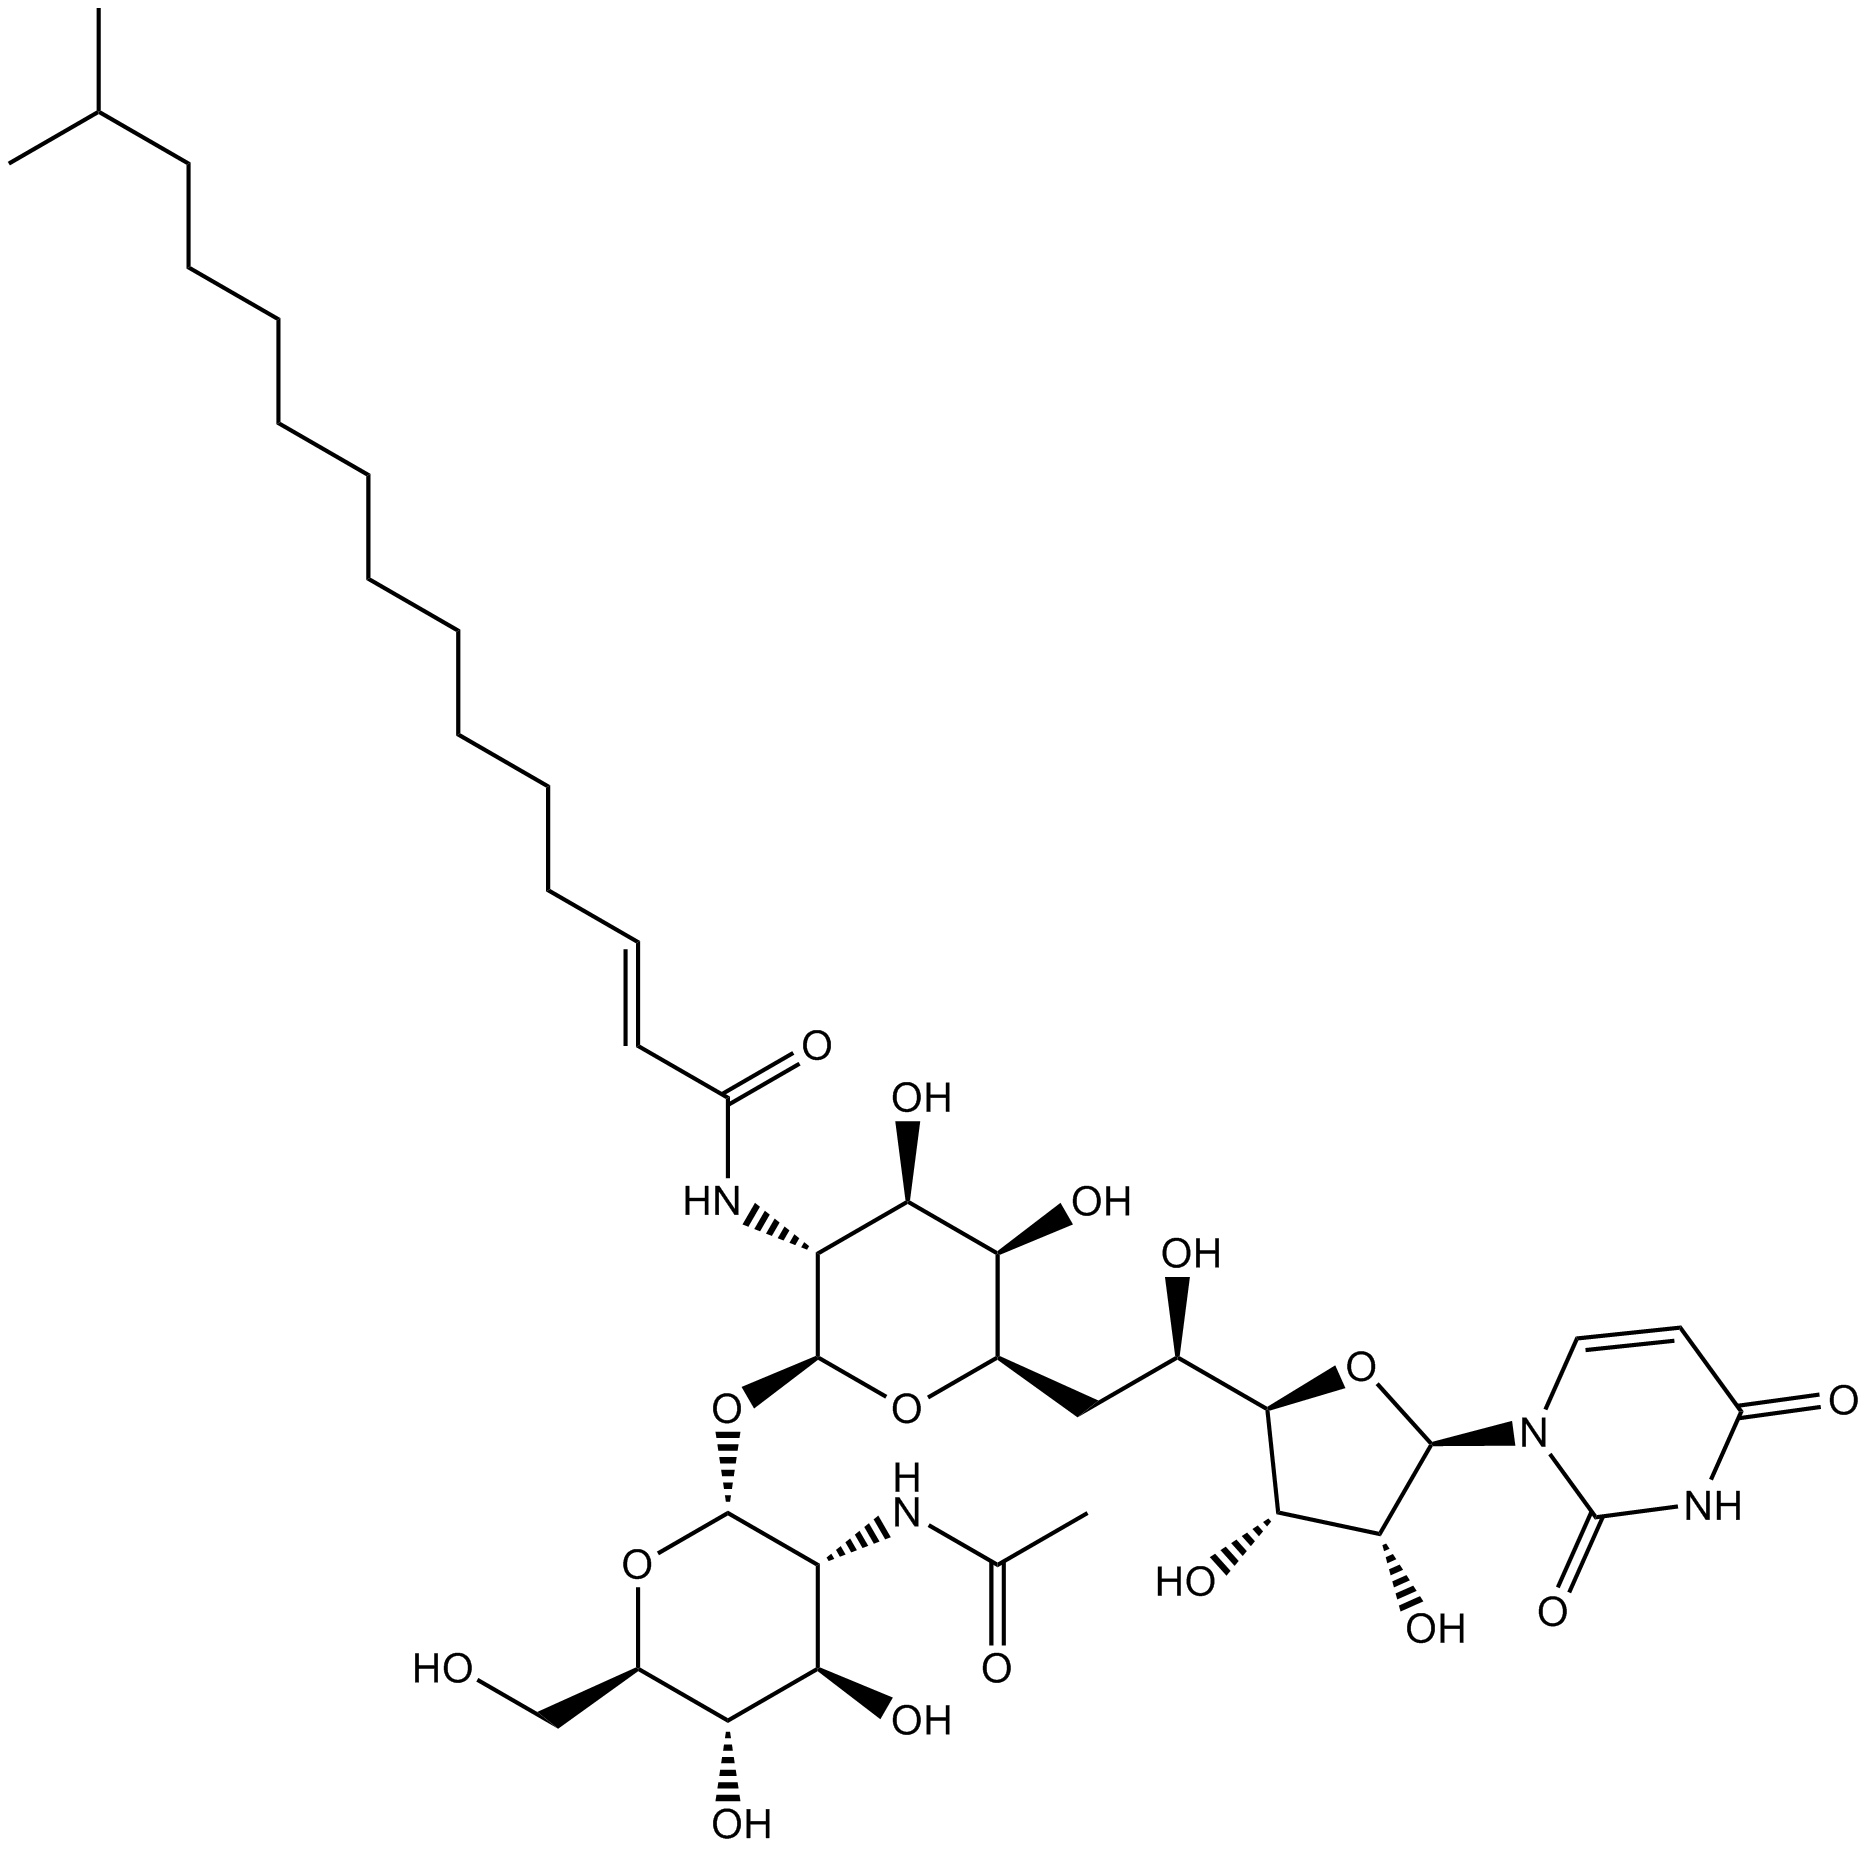 Tunicamycin